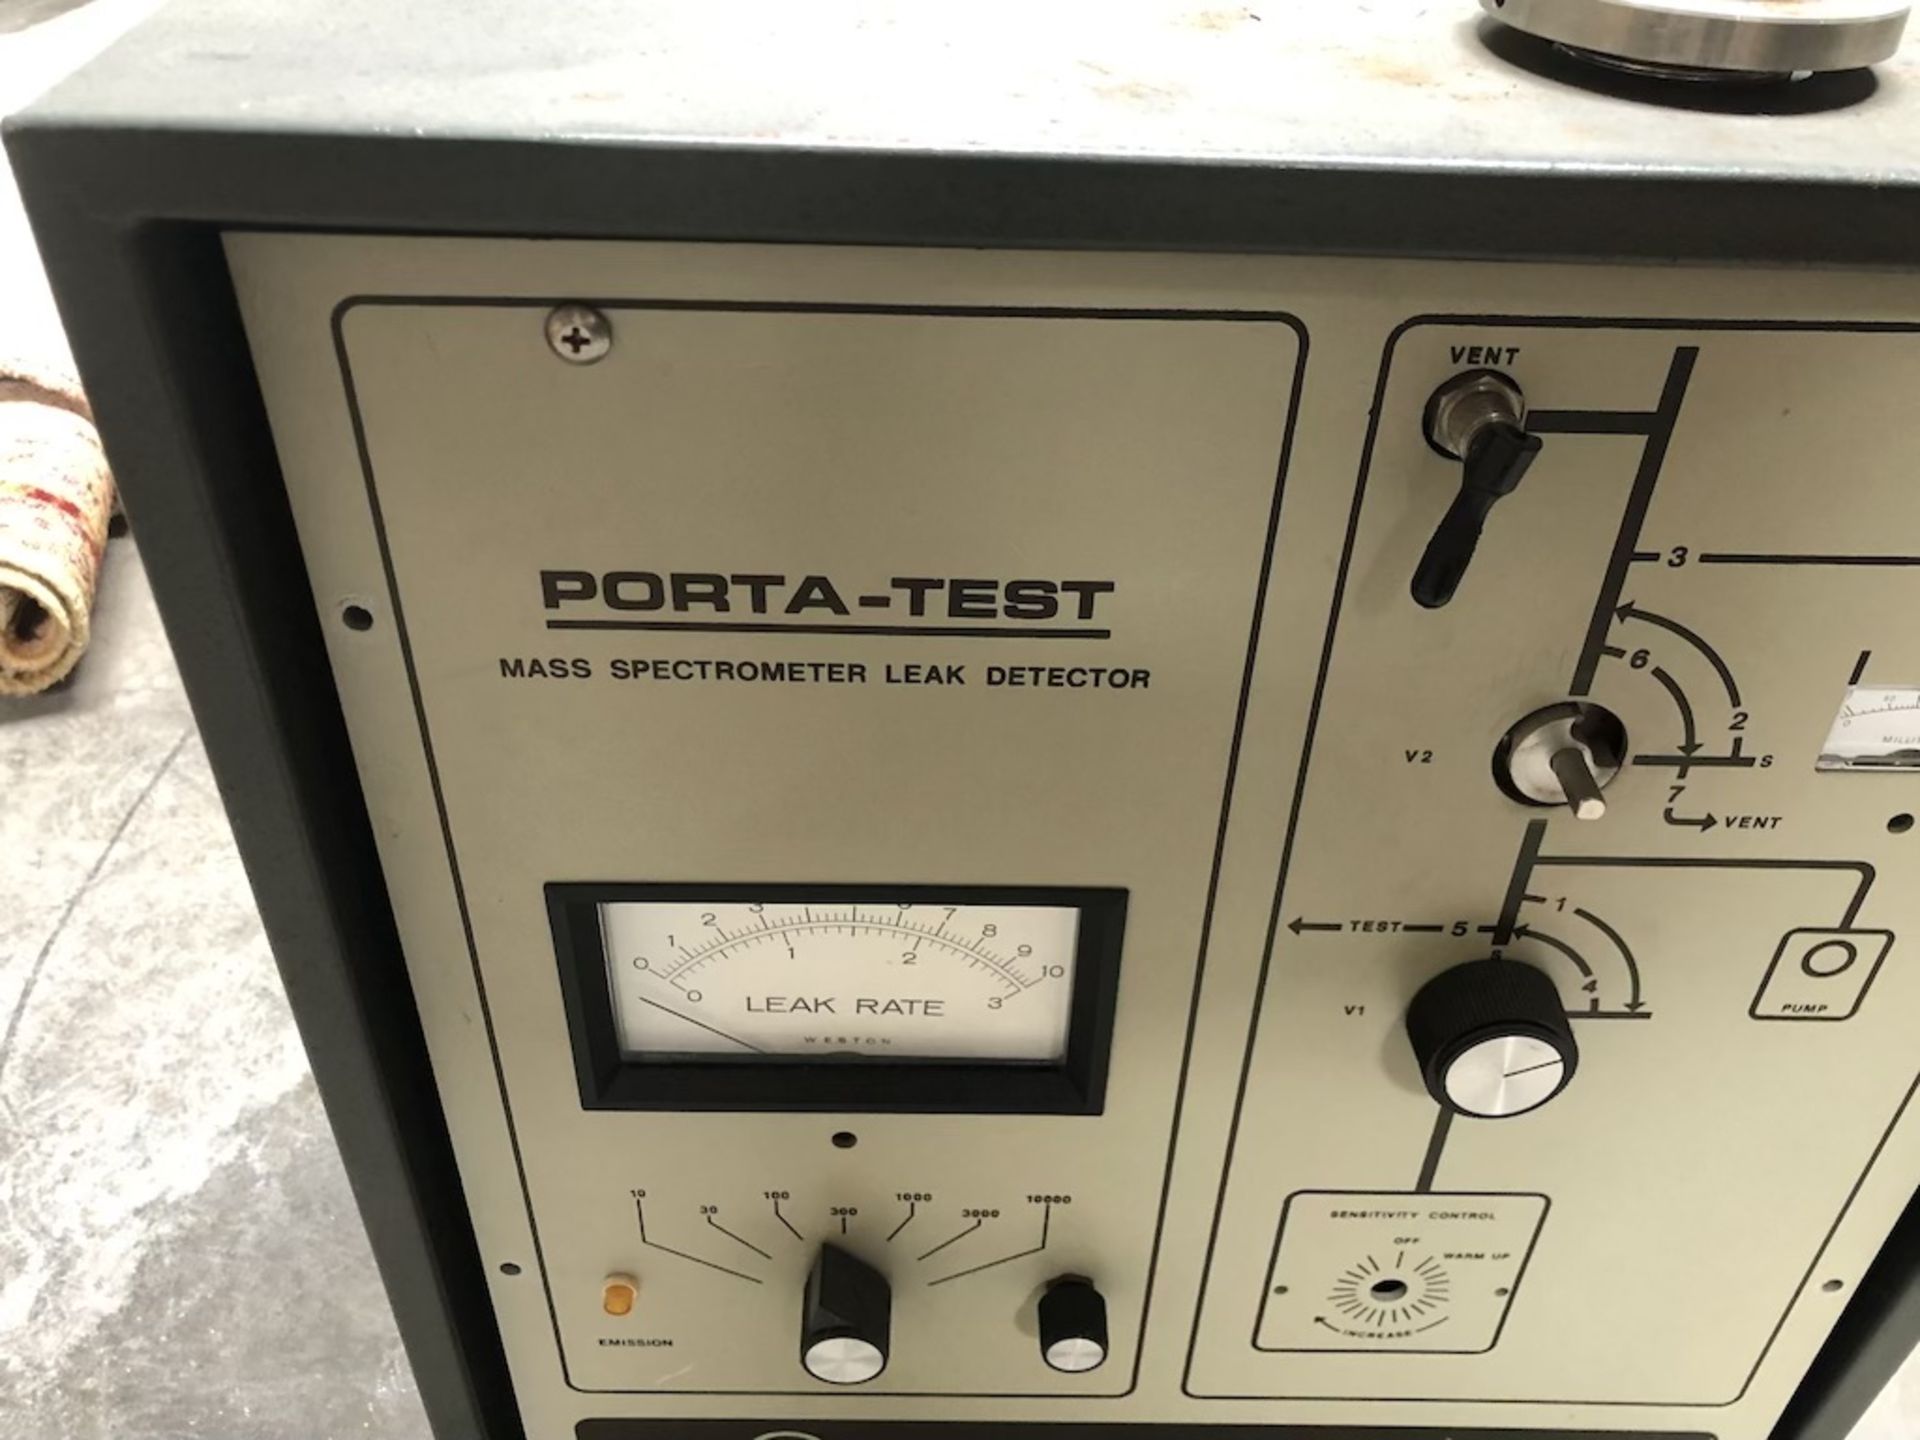 VARIAN 925-40 PORTA-TEST MASS SPECTROMETER LEAK DETECTOR 120V, 1 PHASE, 60HZ, 400W Y-051 - Image 2 of 7